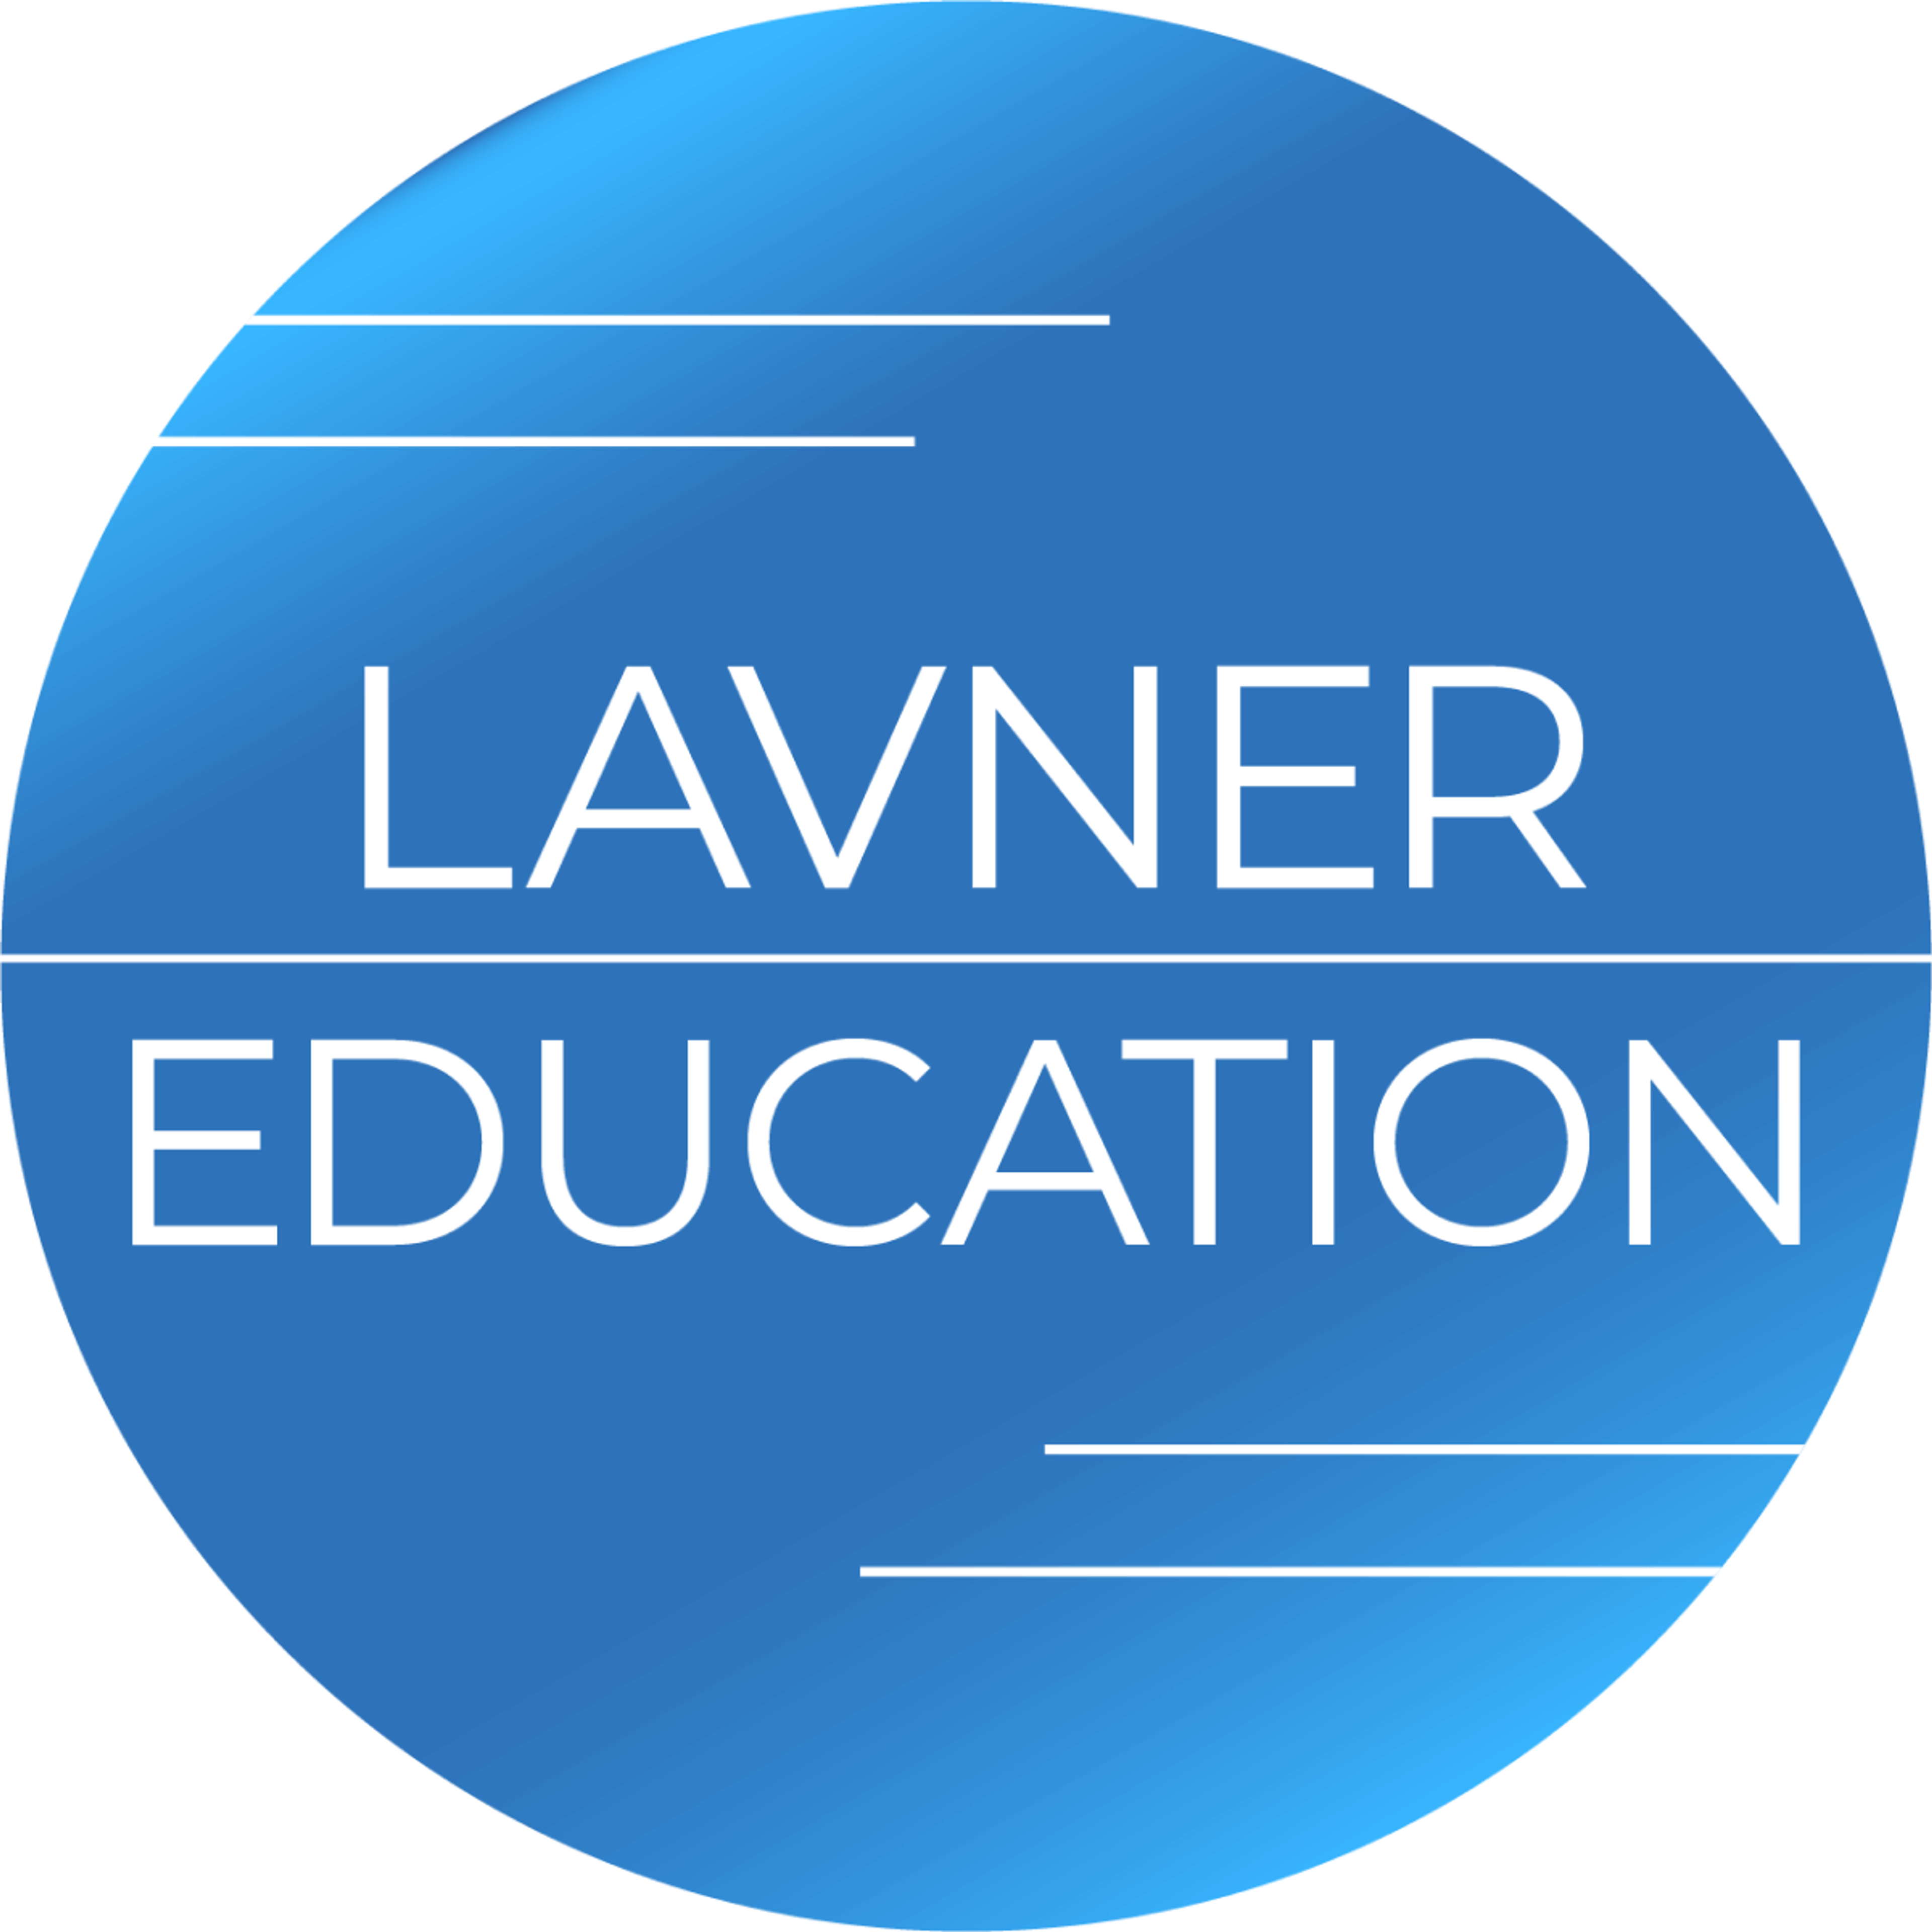 Lavner Education logo